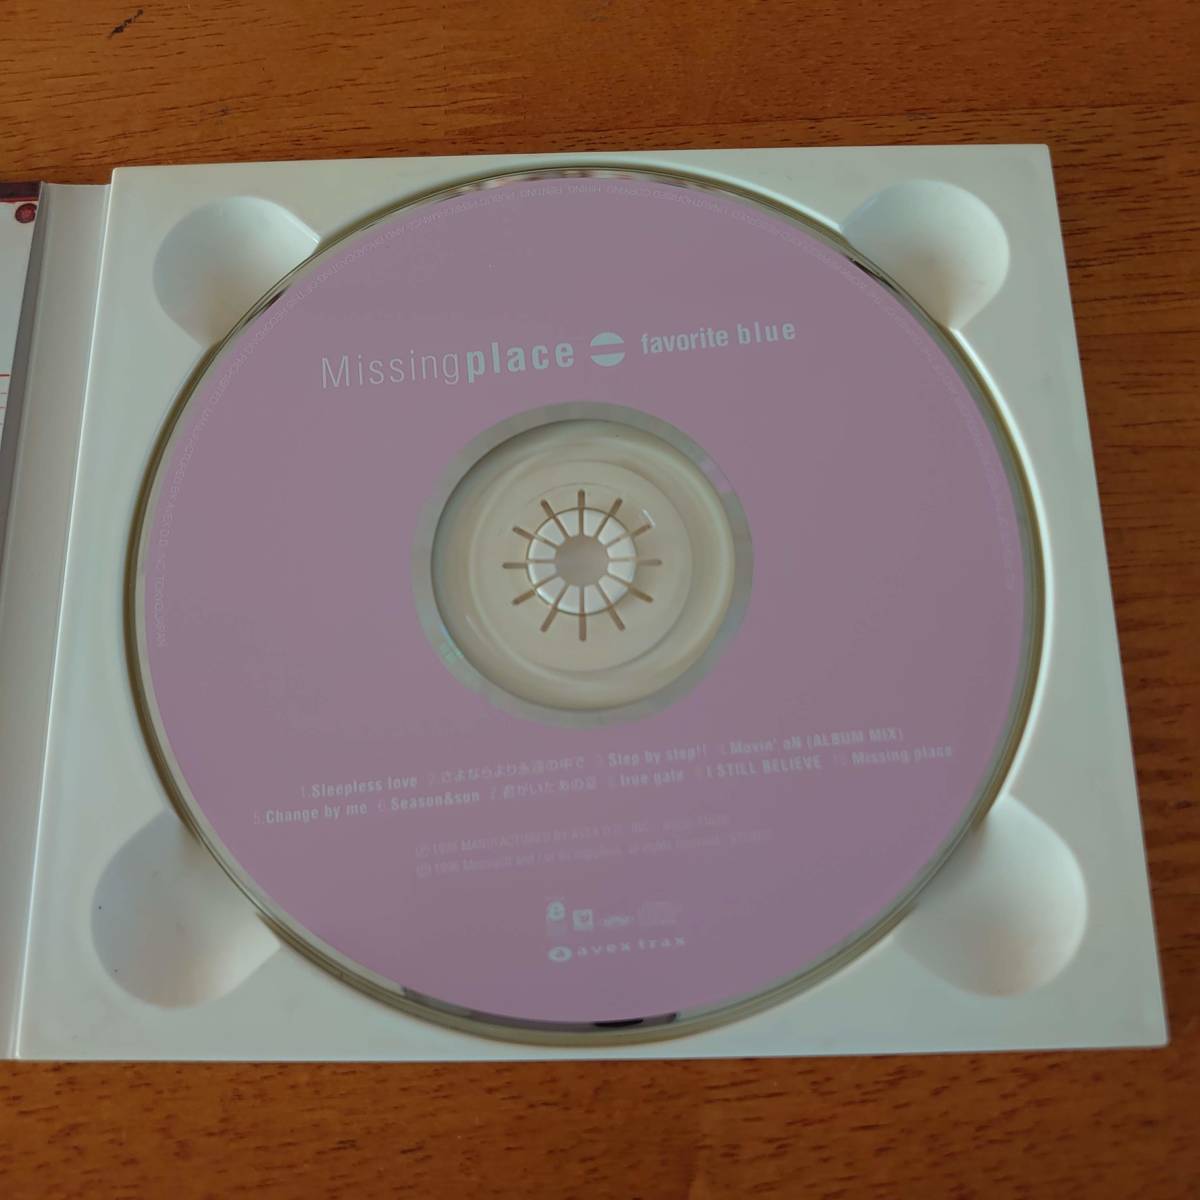 Favorite Blue / Missingplace フェイバリット・ブルー 初回盤 デジパック仕様 【CD】_画像3